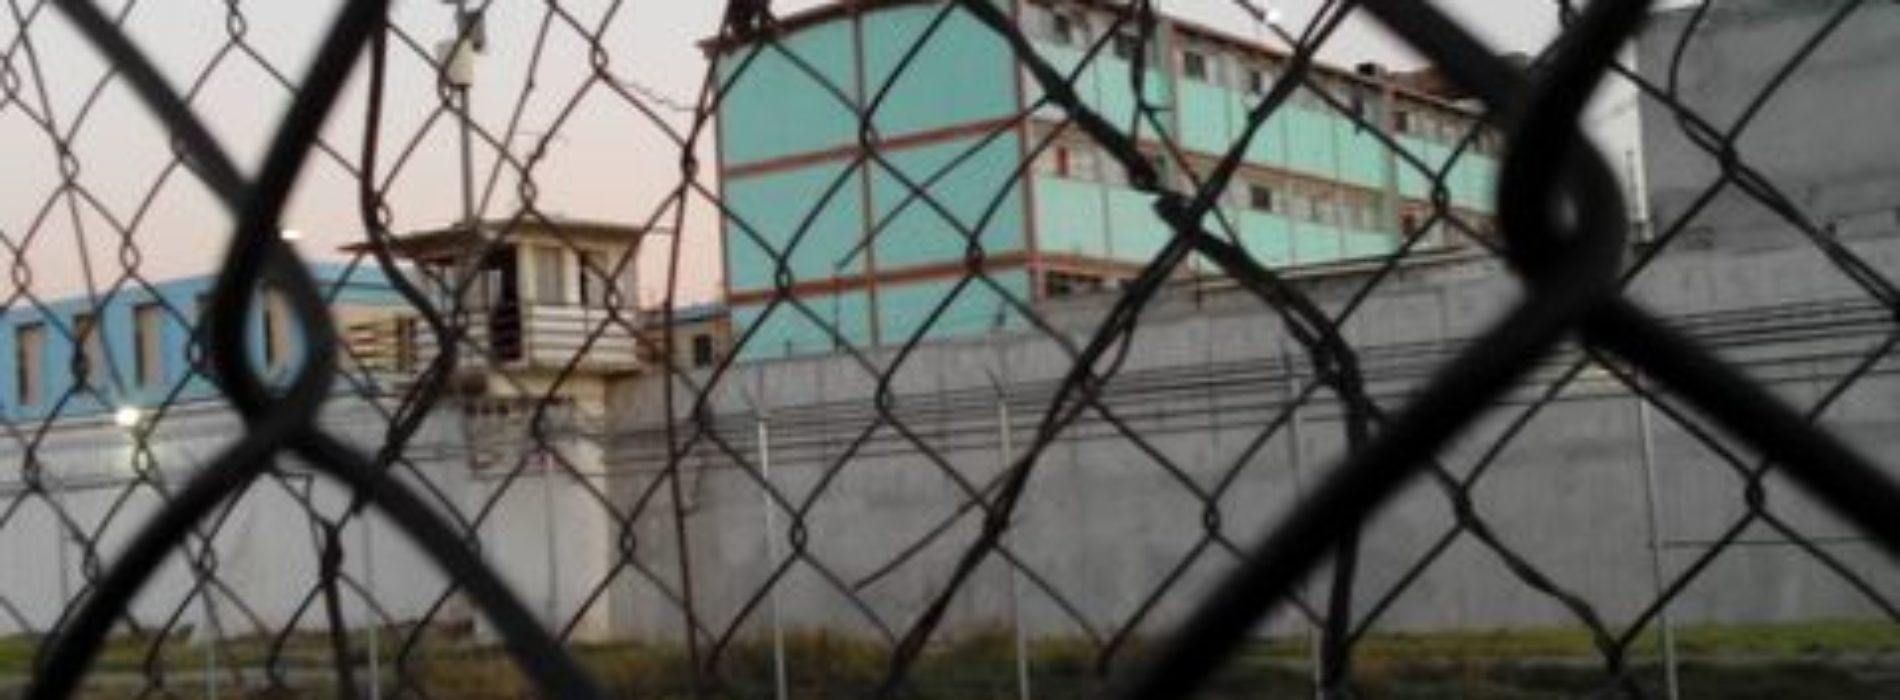 Refuerzan seguridad en cárceles de Coahuila